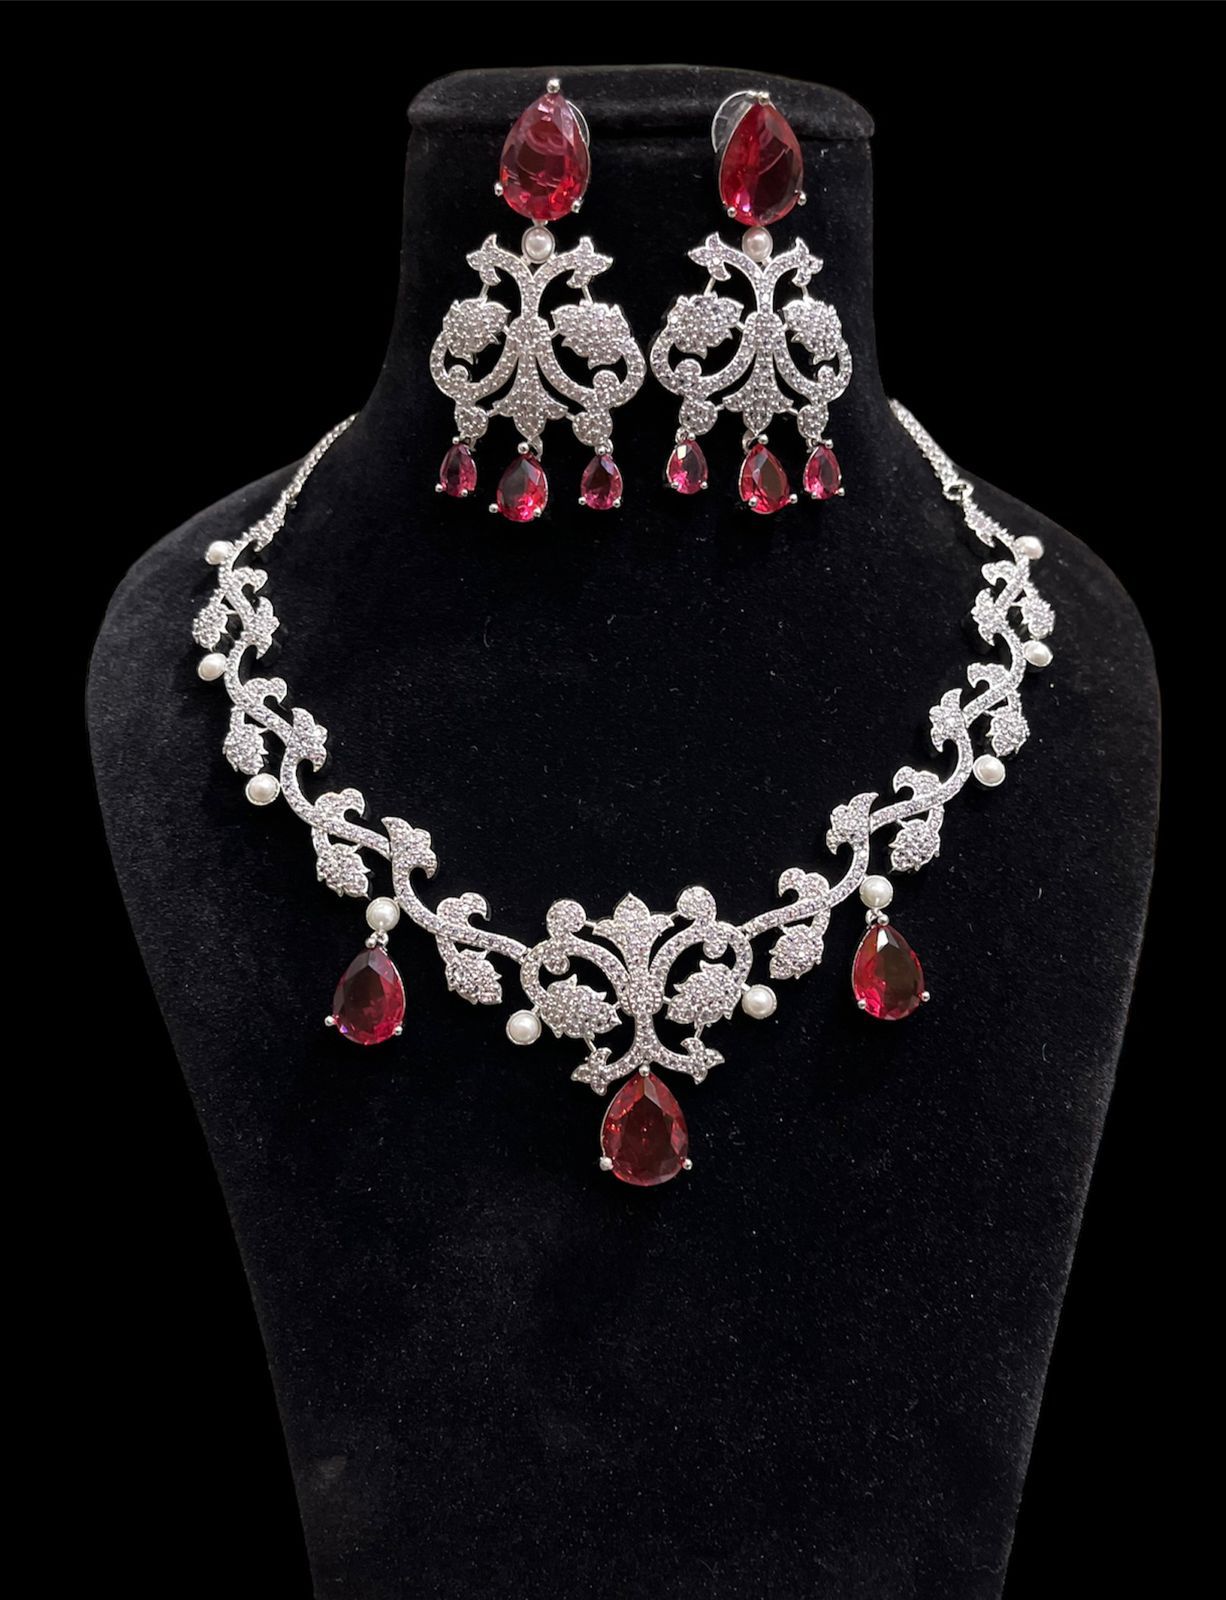 High quality American Diamond Necklace set